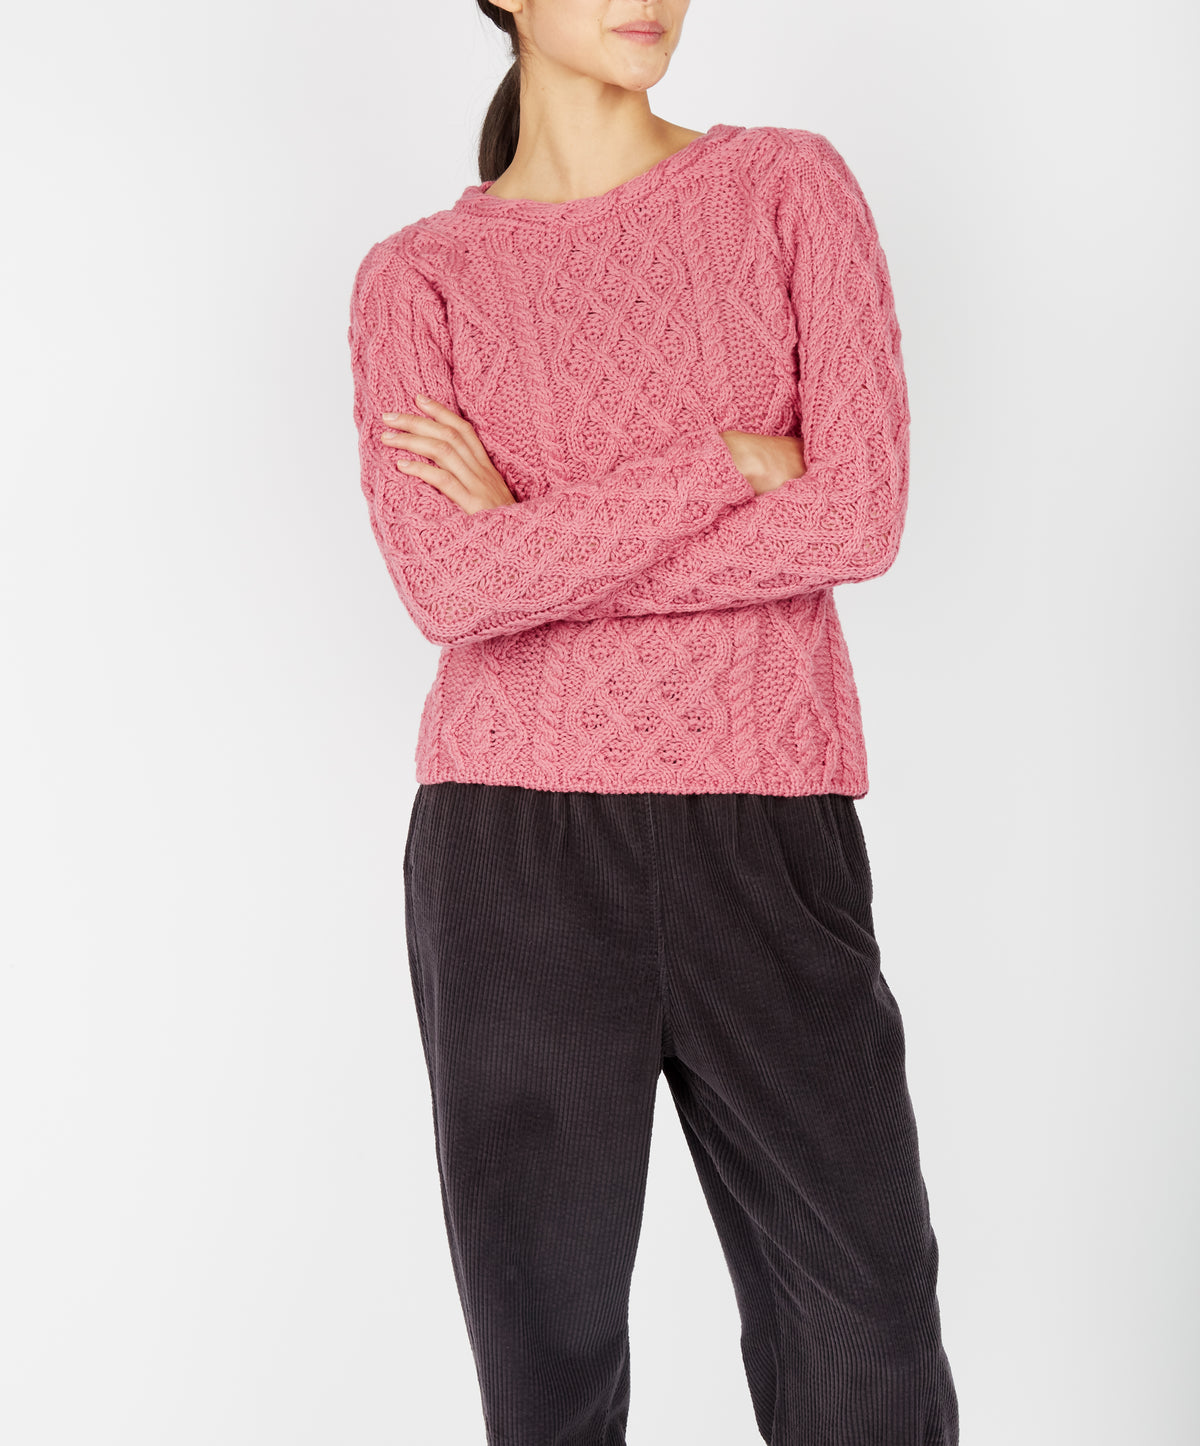 IrelandsEye Knitwear Lambay Lattice Cable Aran Sweater Rosa Pink